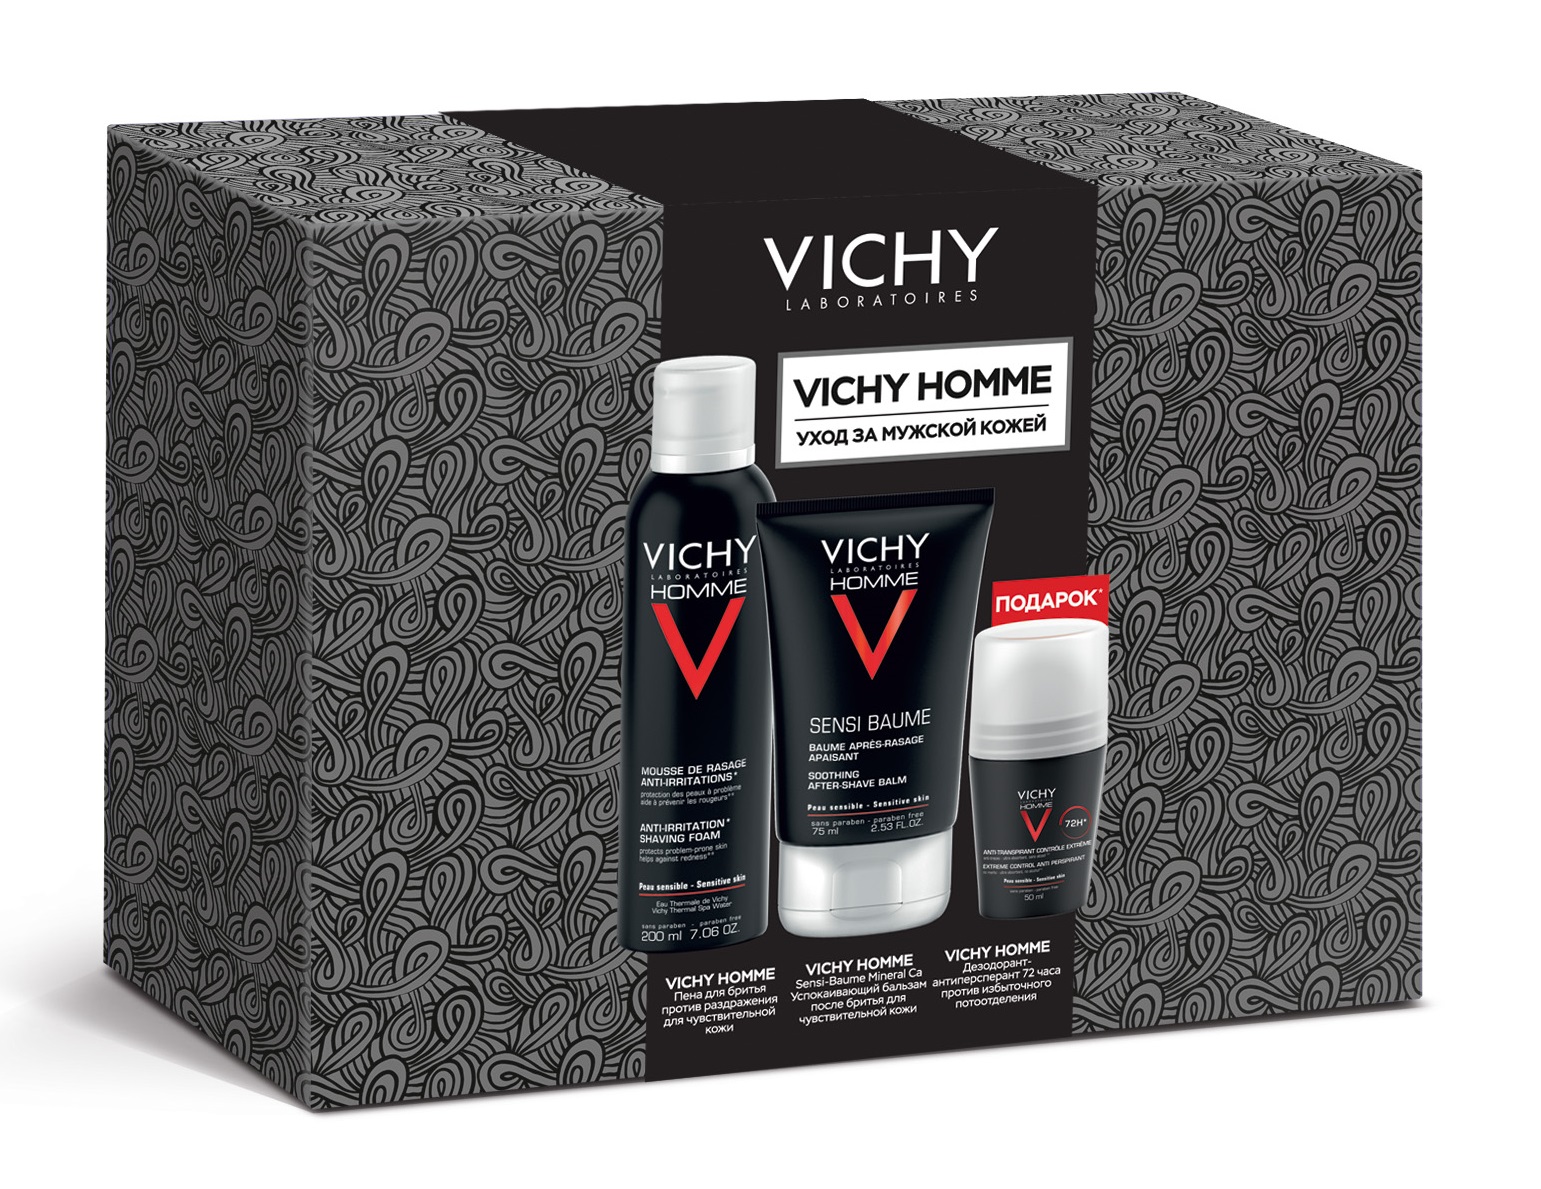 Мужской набор 1. Набор виши homme. Vichy пена для бритья Vichy homme 200 мл. Vichy homme Sensi пена для бритья. Vichy подарочный набор.